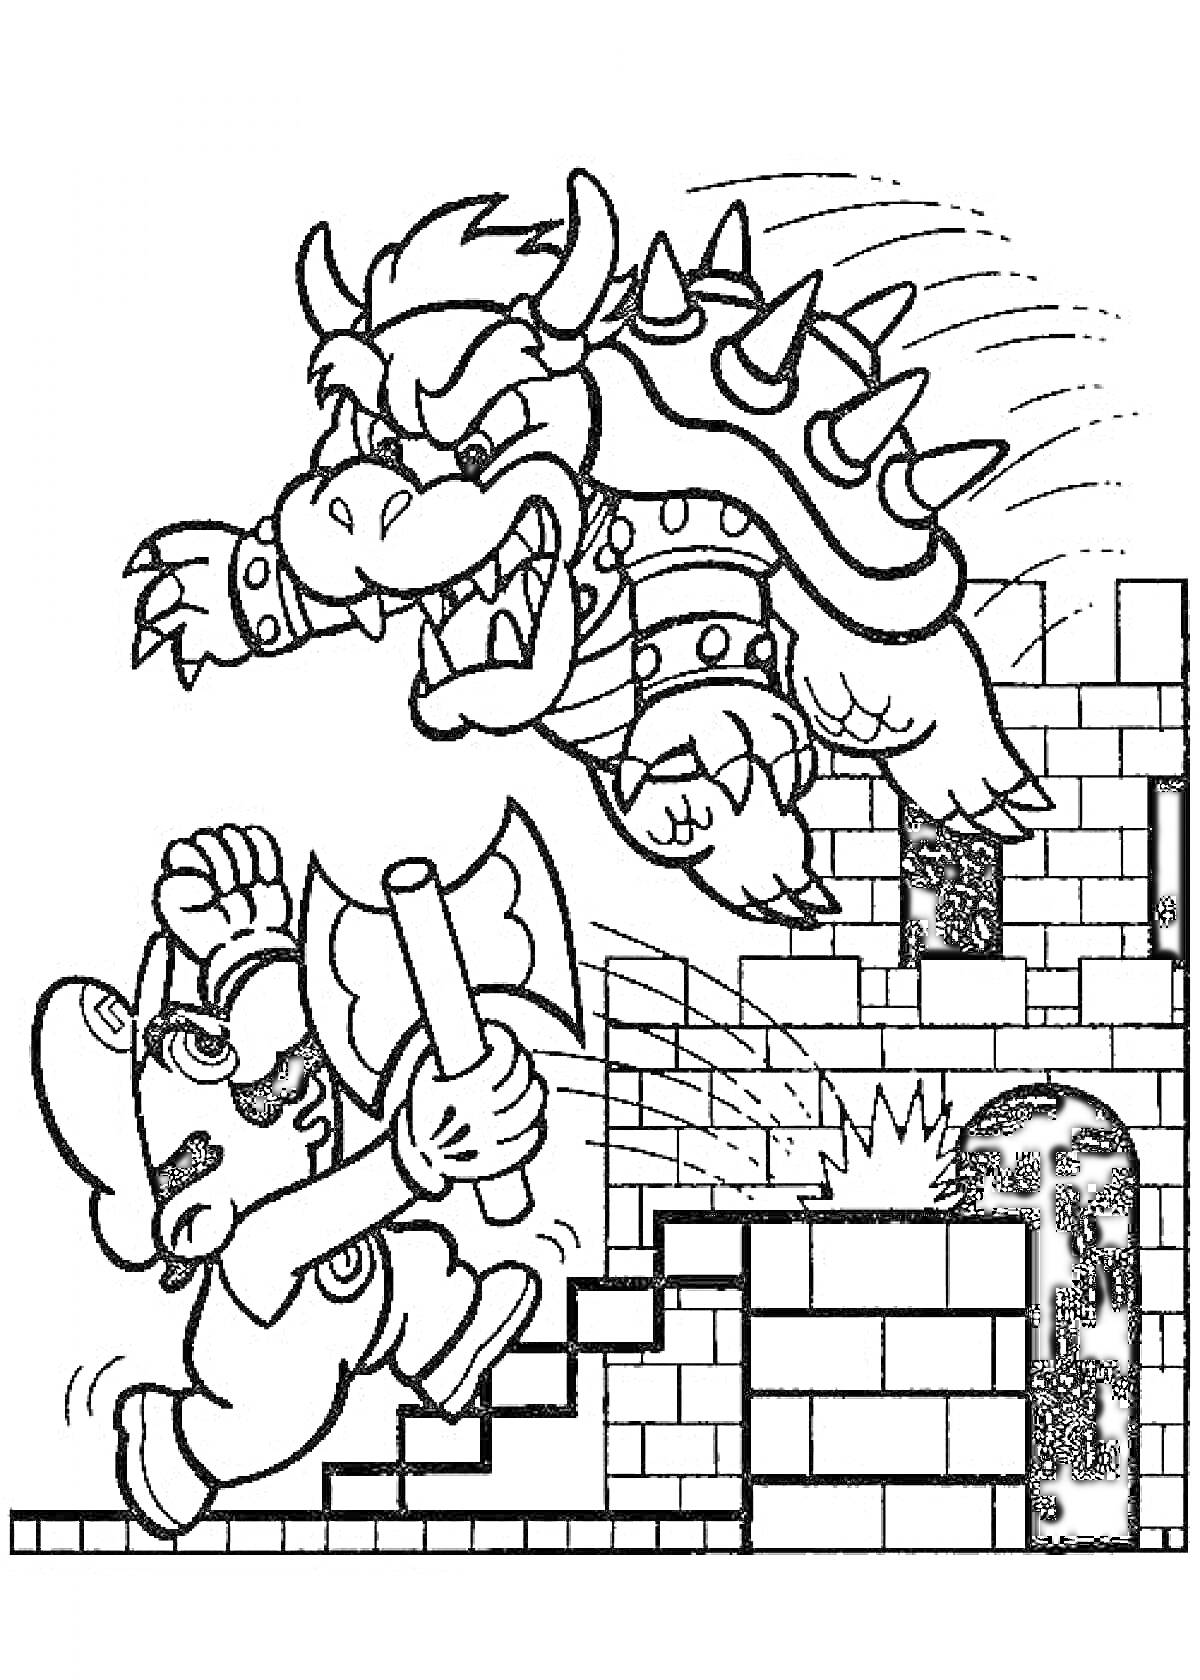  Марио с топором против Боузера на лестнице замка